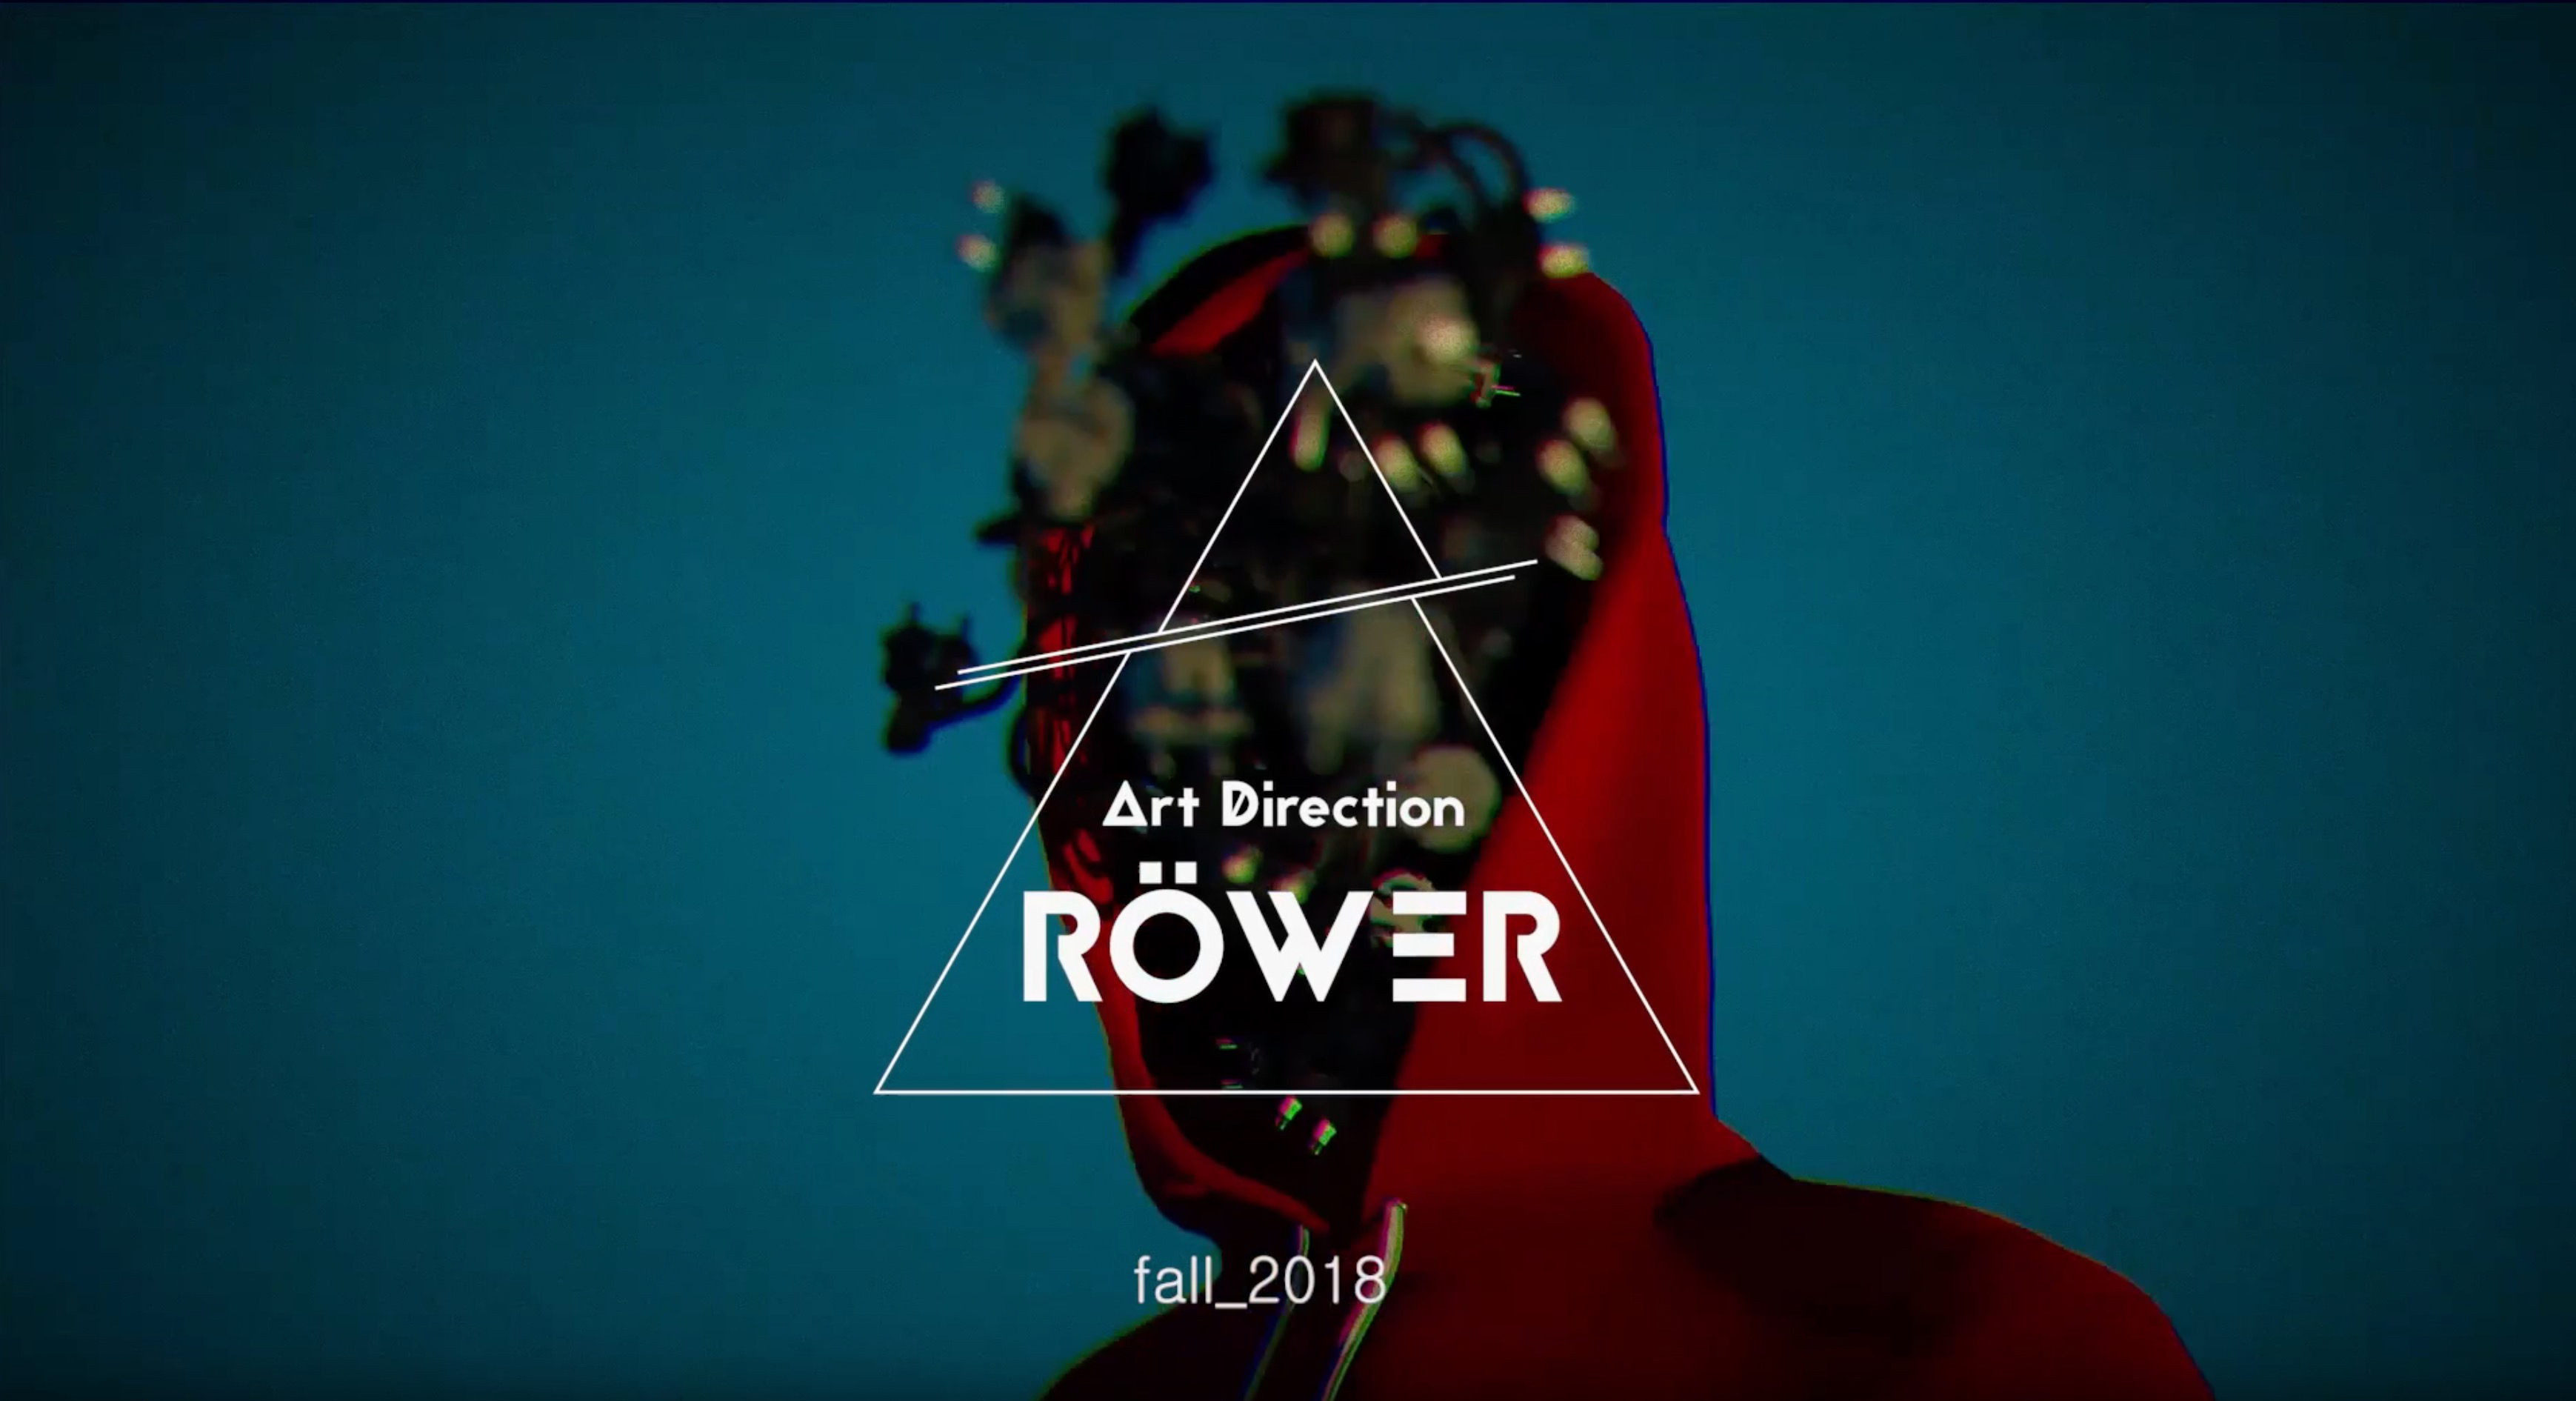 AD Röwer Trailer 2018